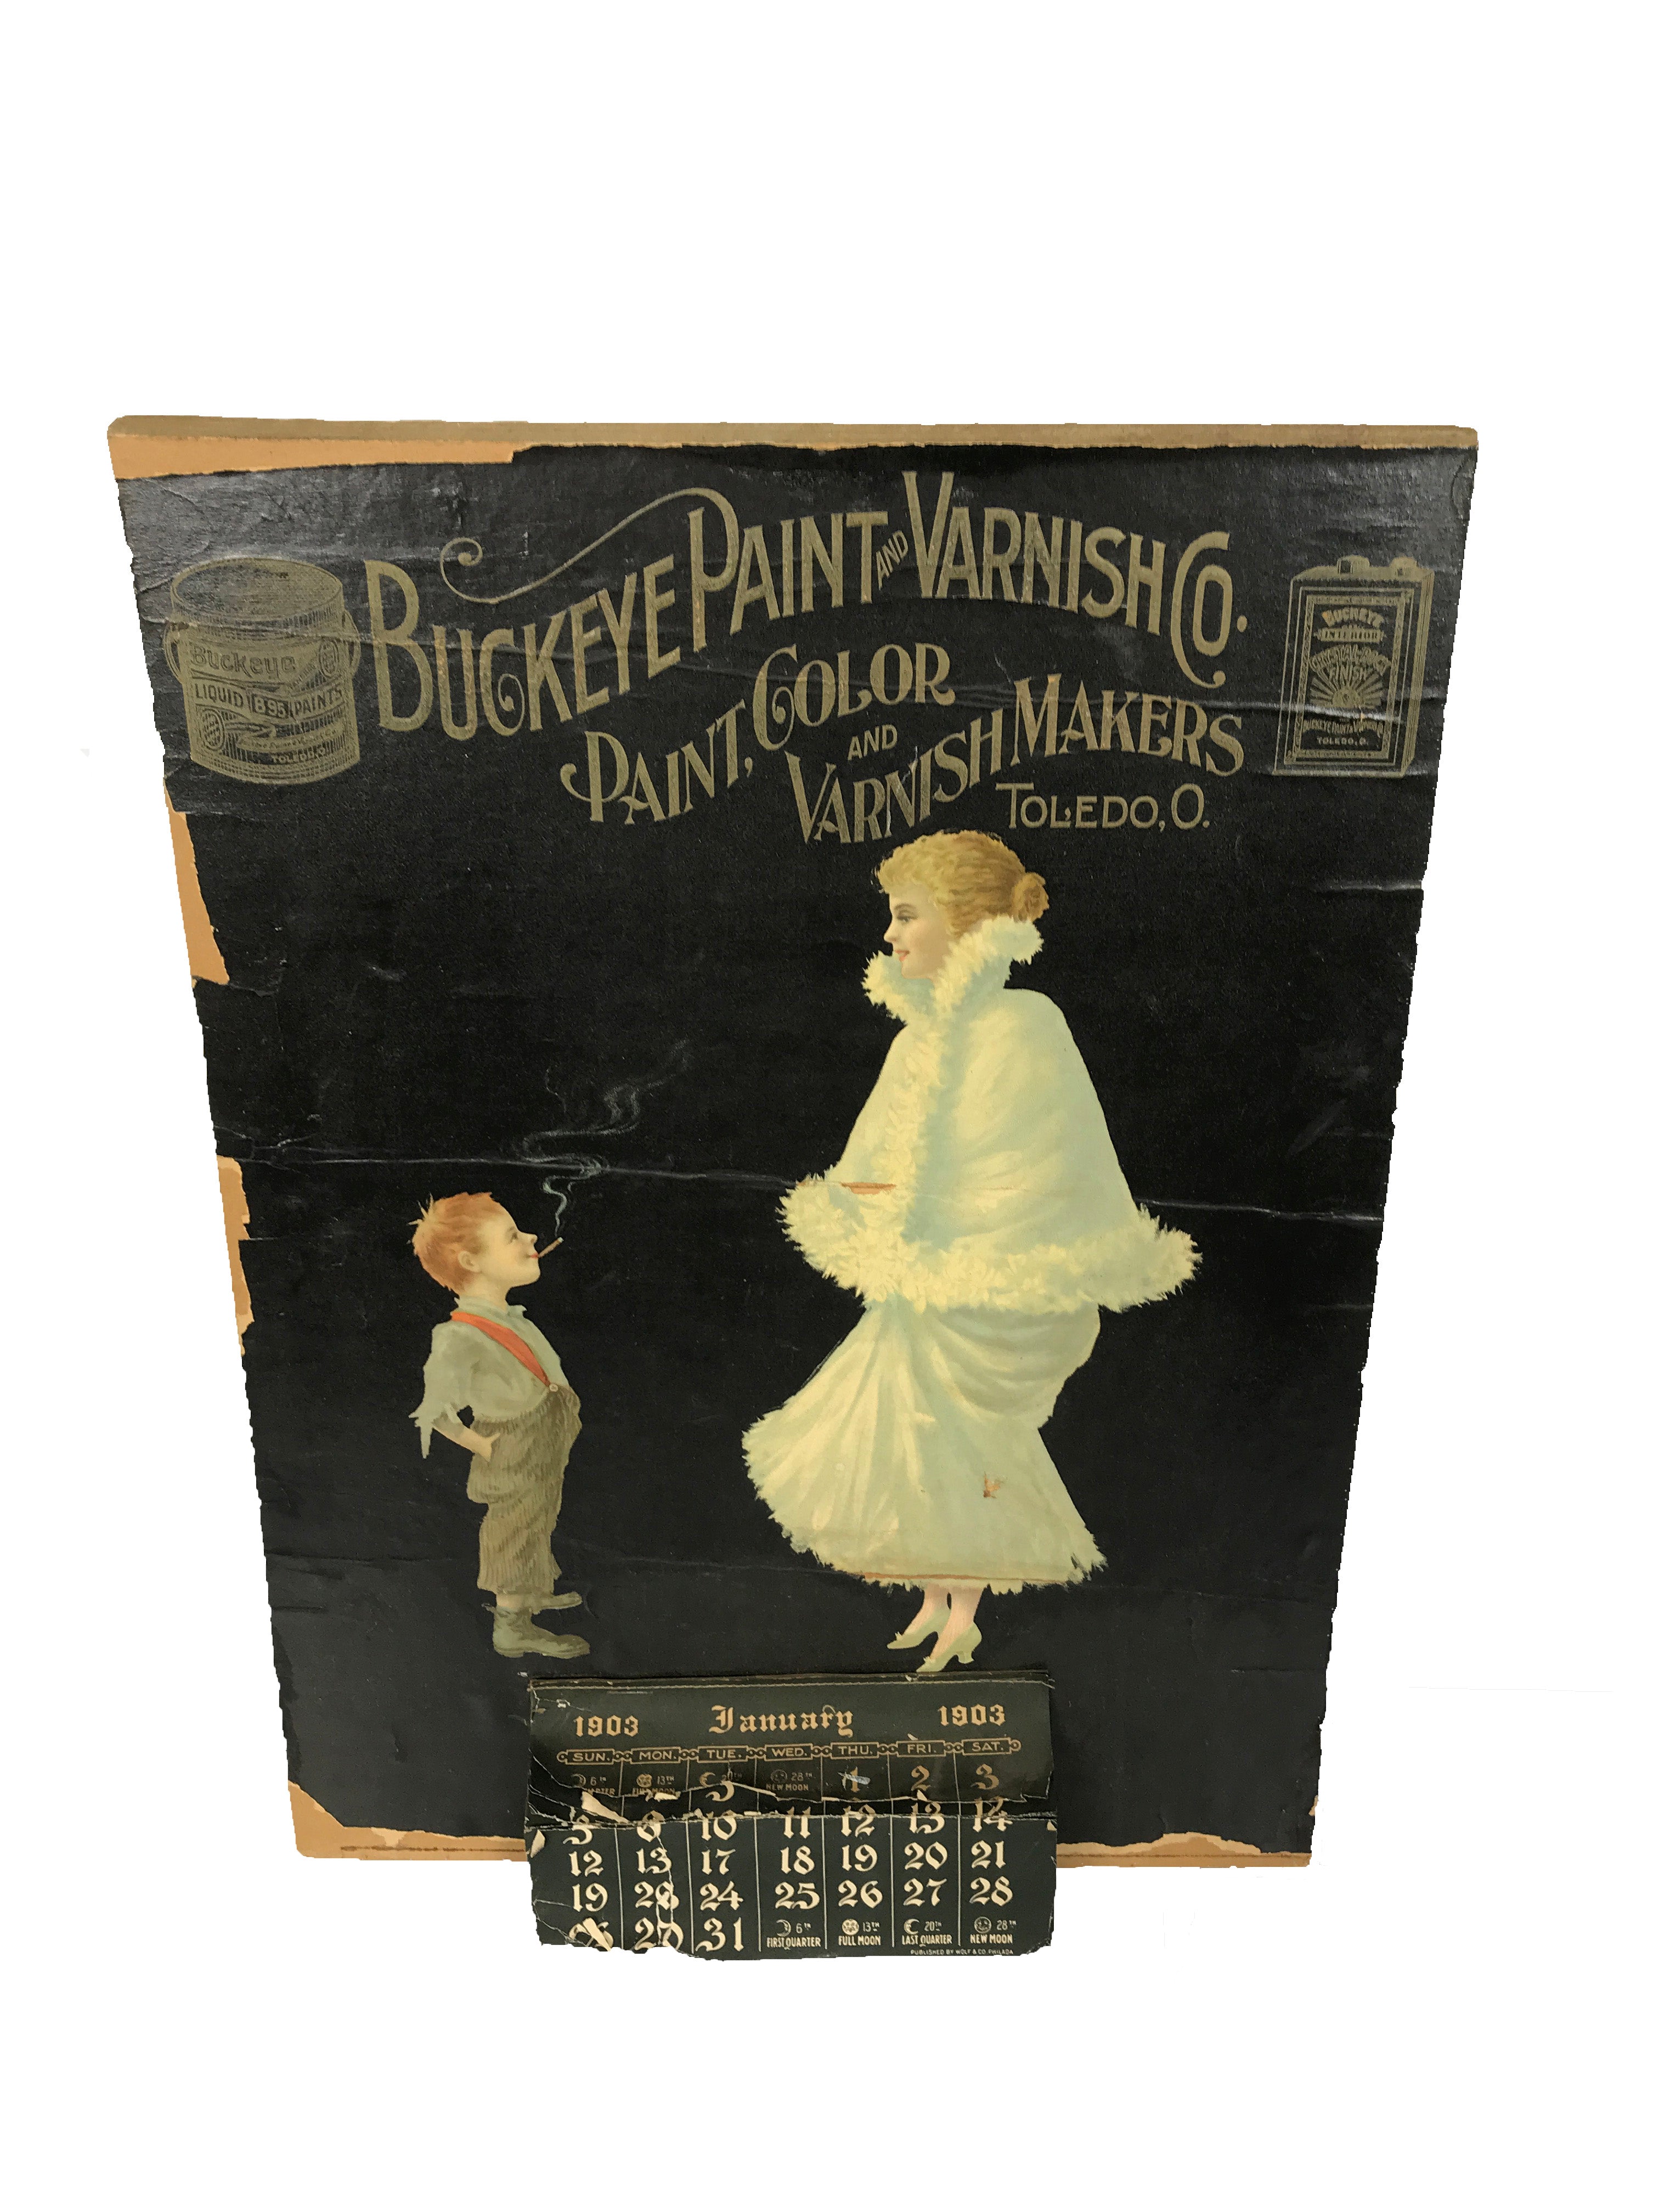 Antique 1903 Buckeye Paint & Varnish Co. Advertising Calendar - Toledo, Ohio